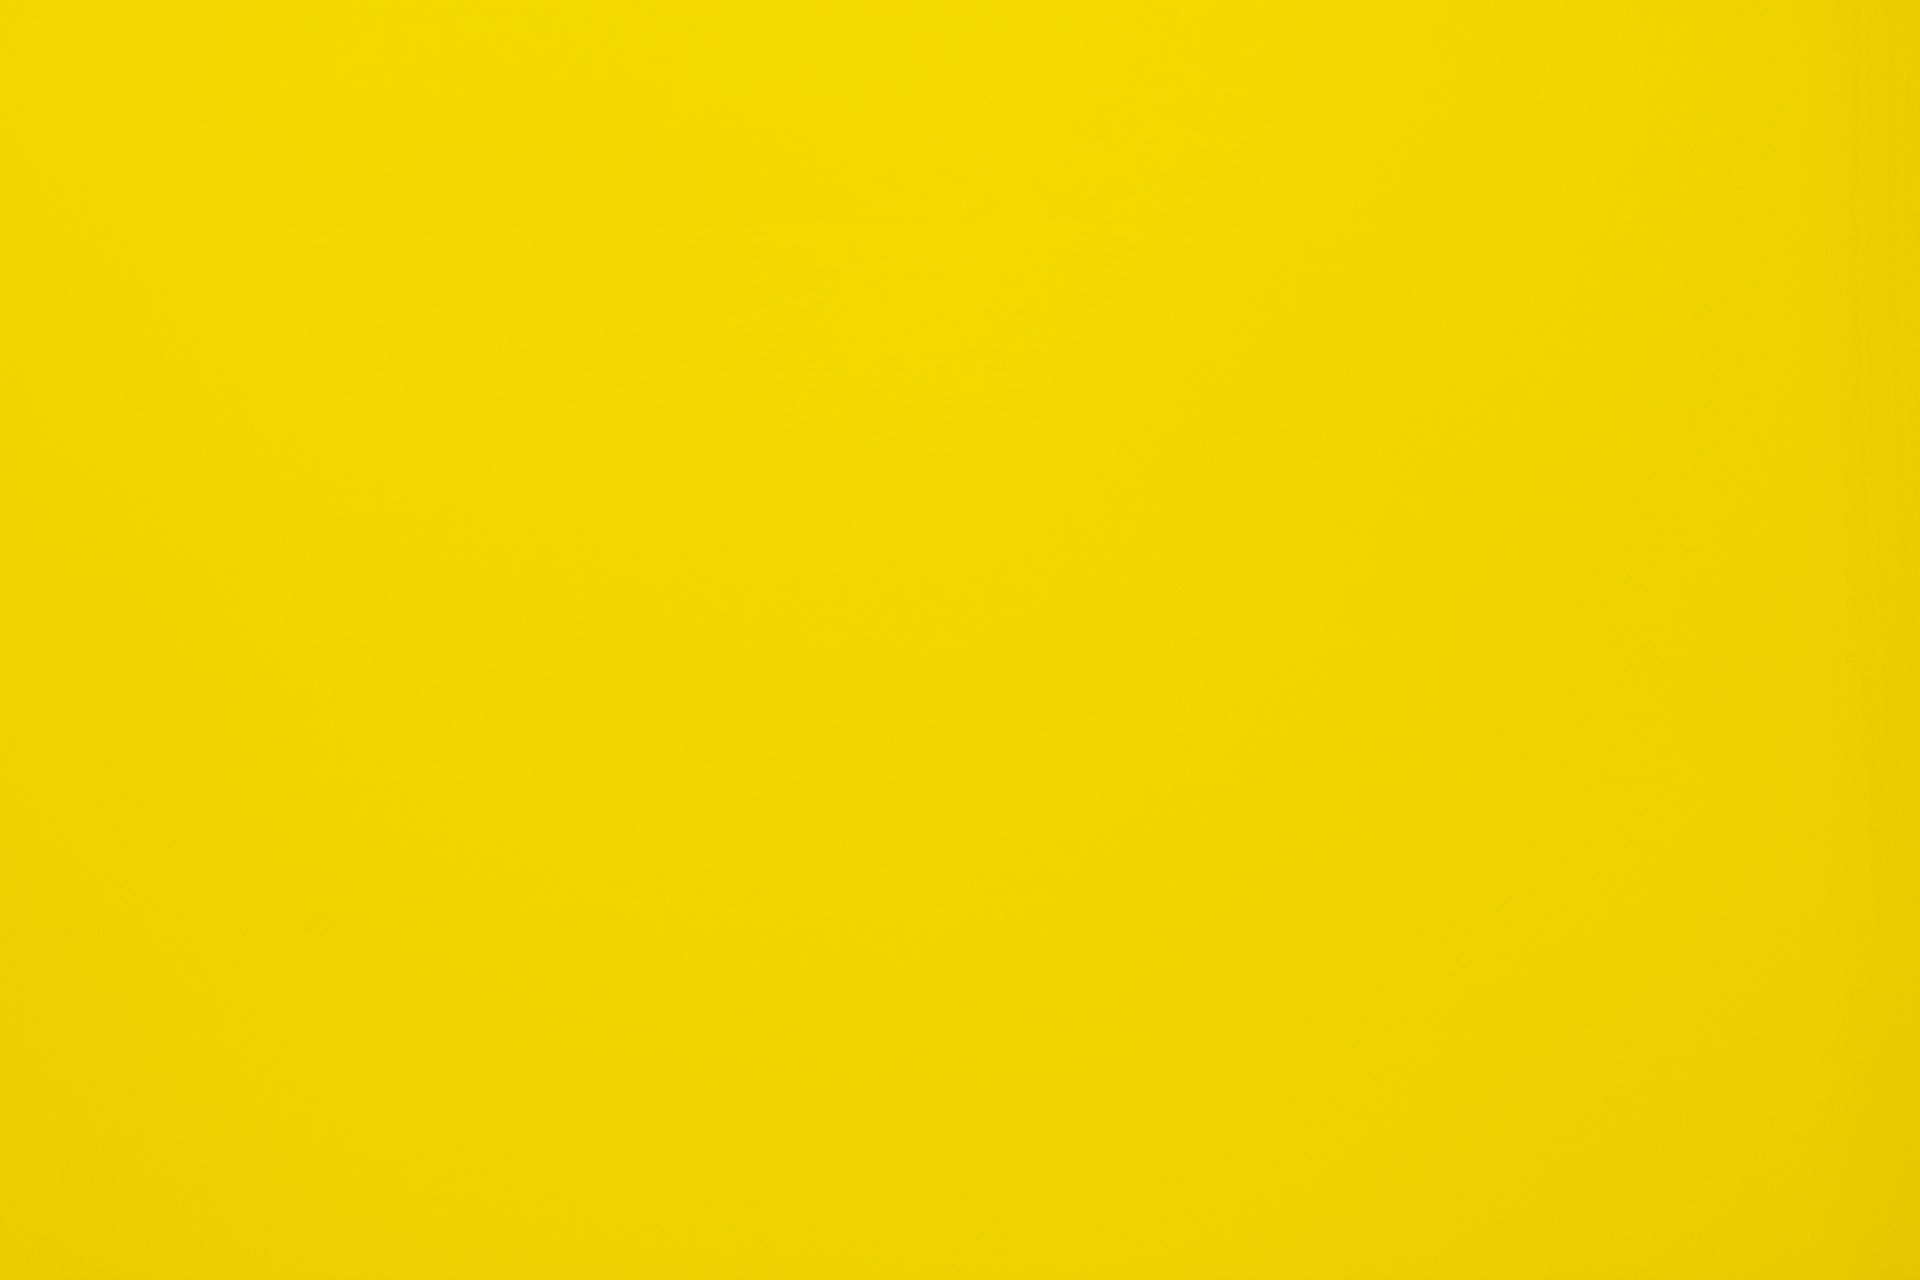 Plain yellow